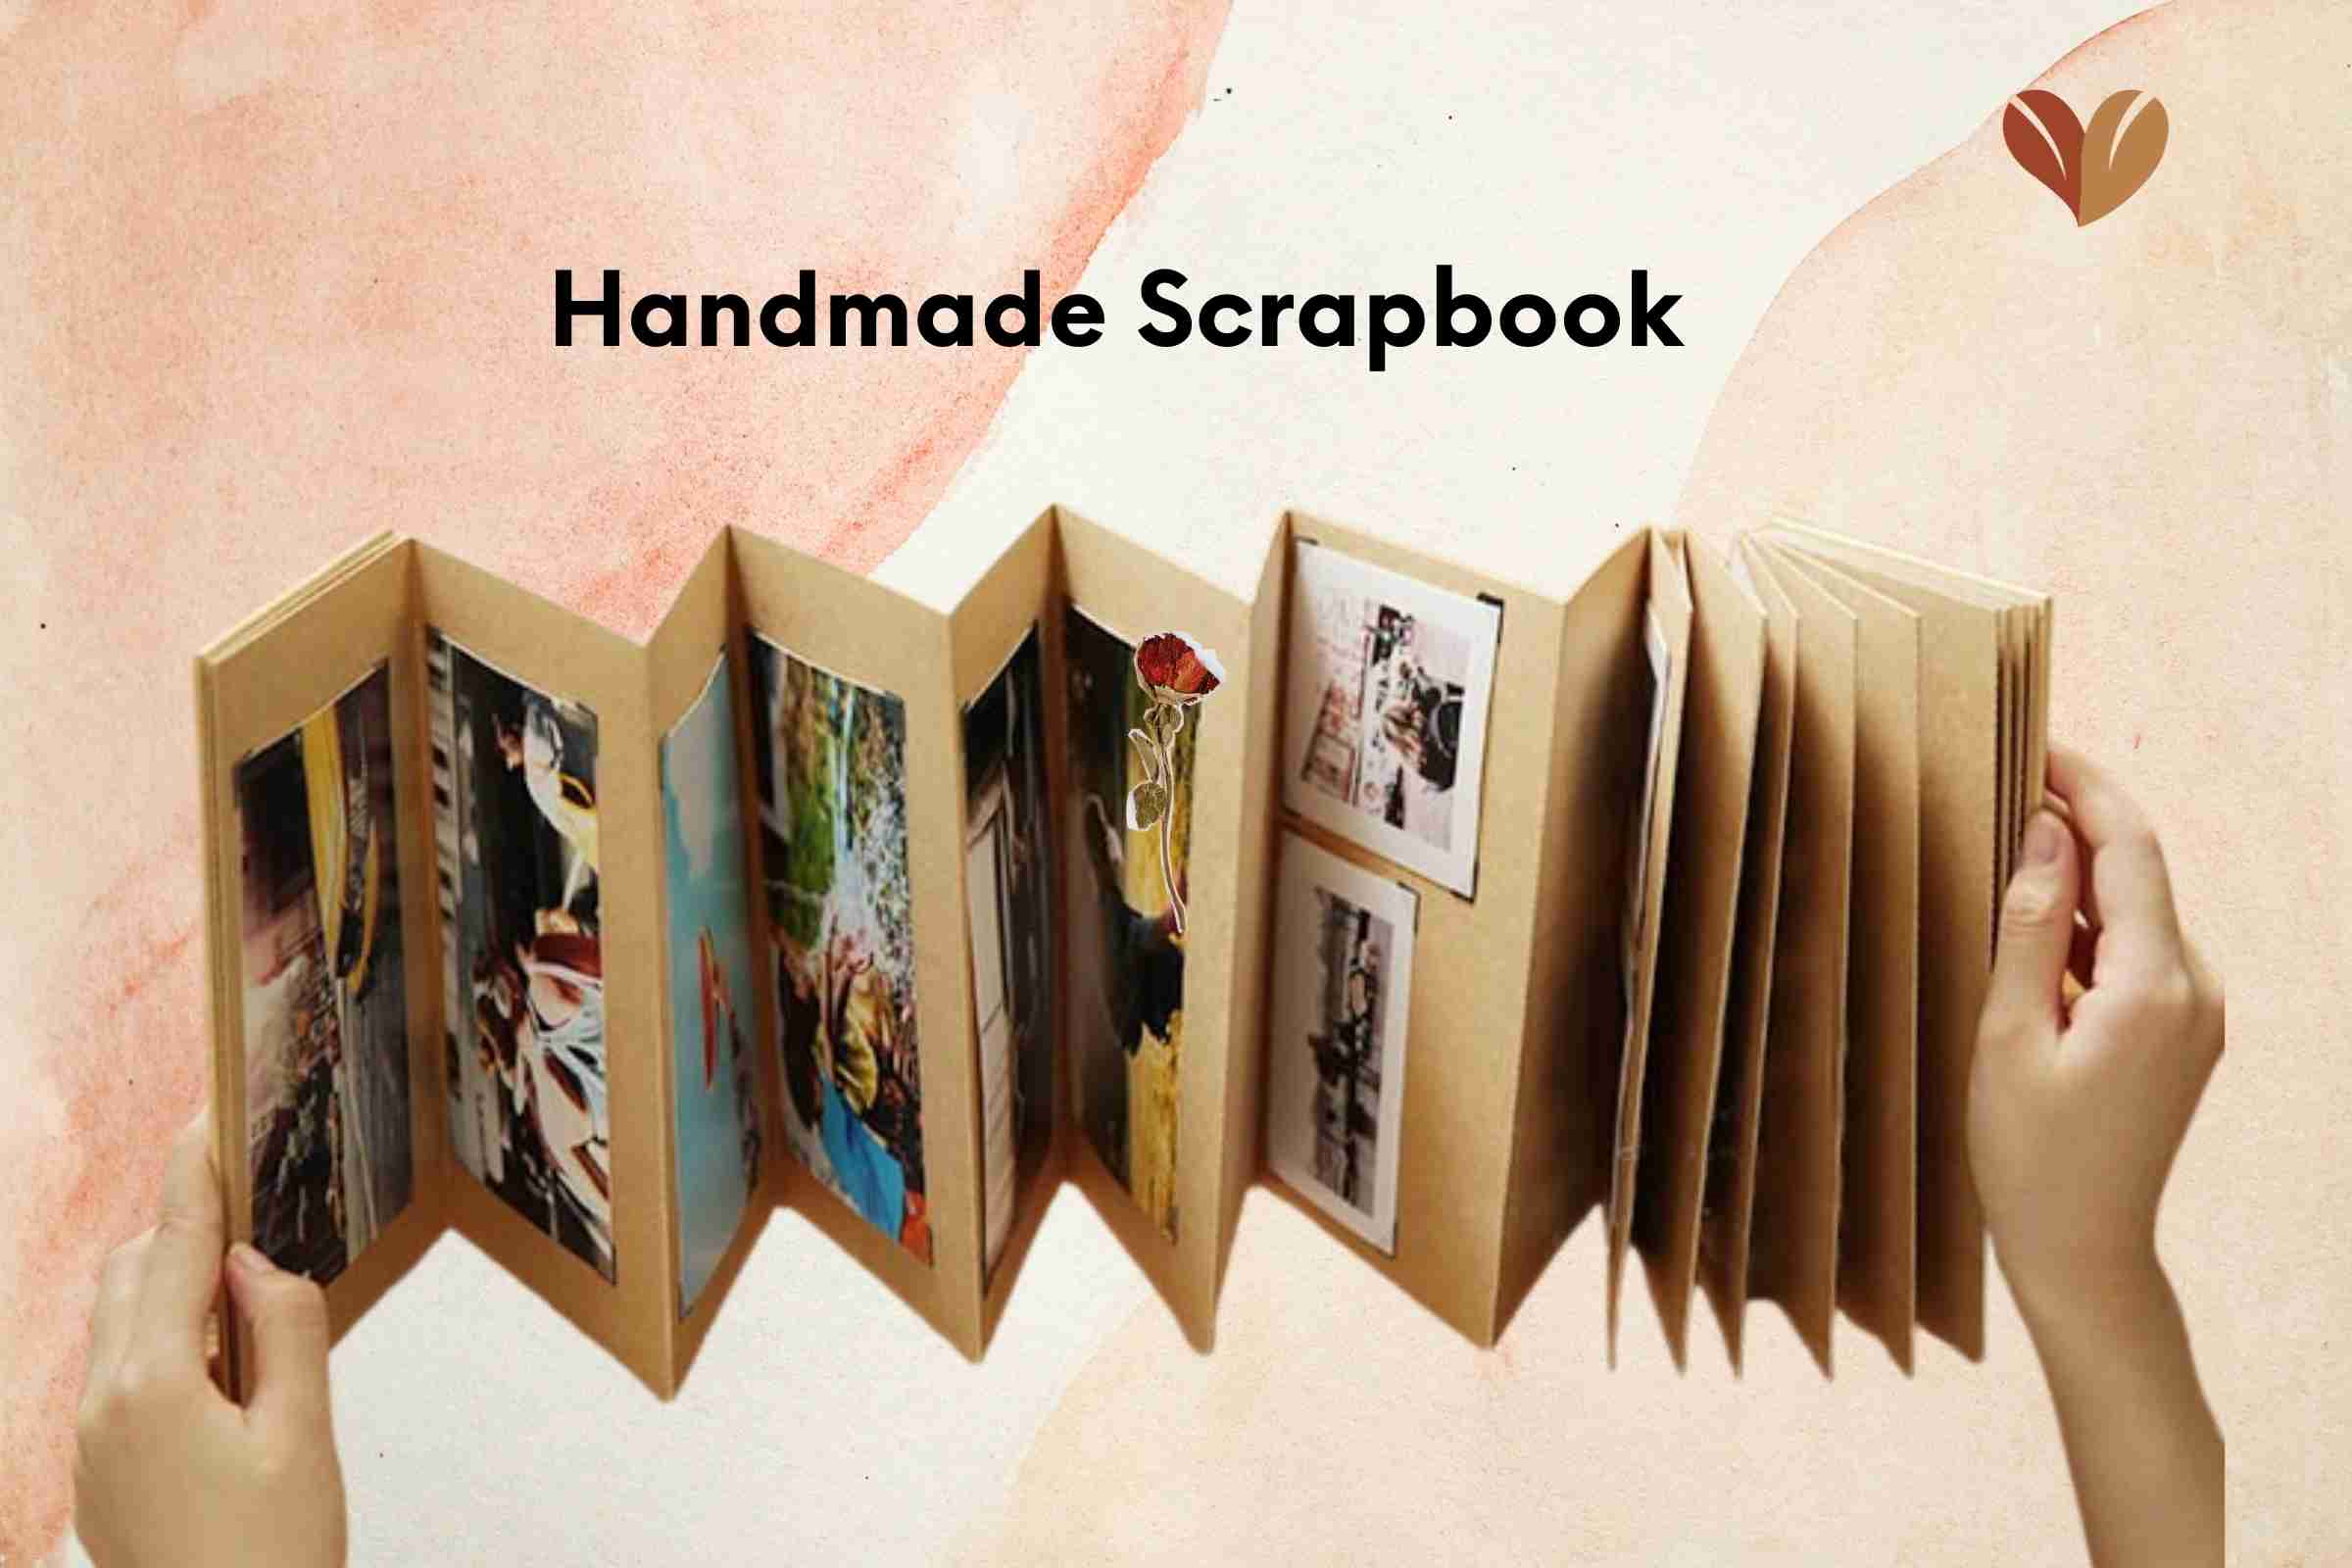 A handmade scrapbook is a beautiful way to gift your long-distance boyfriend